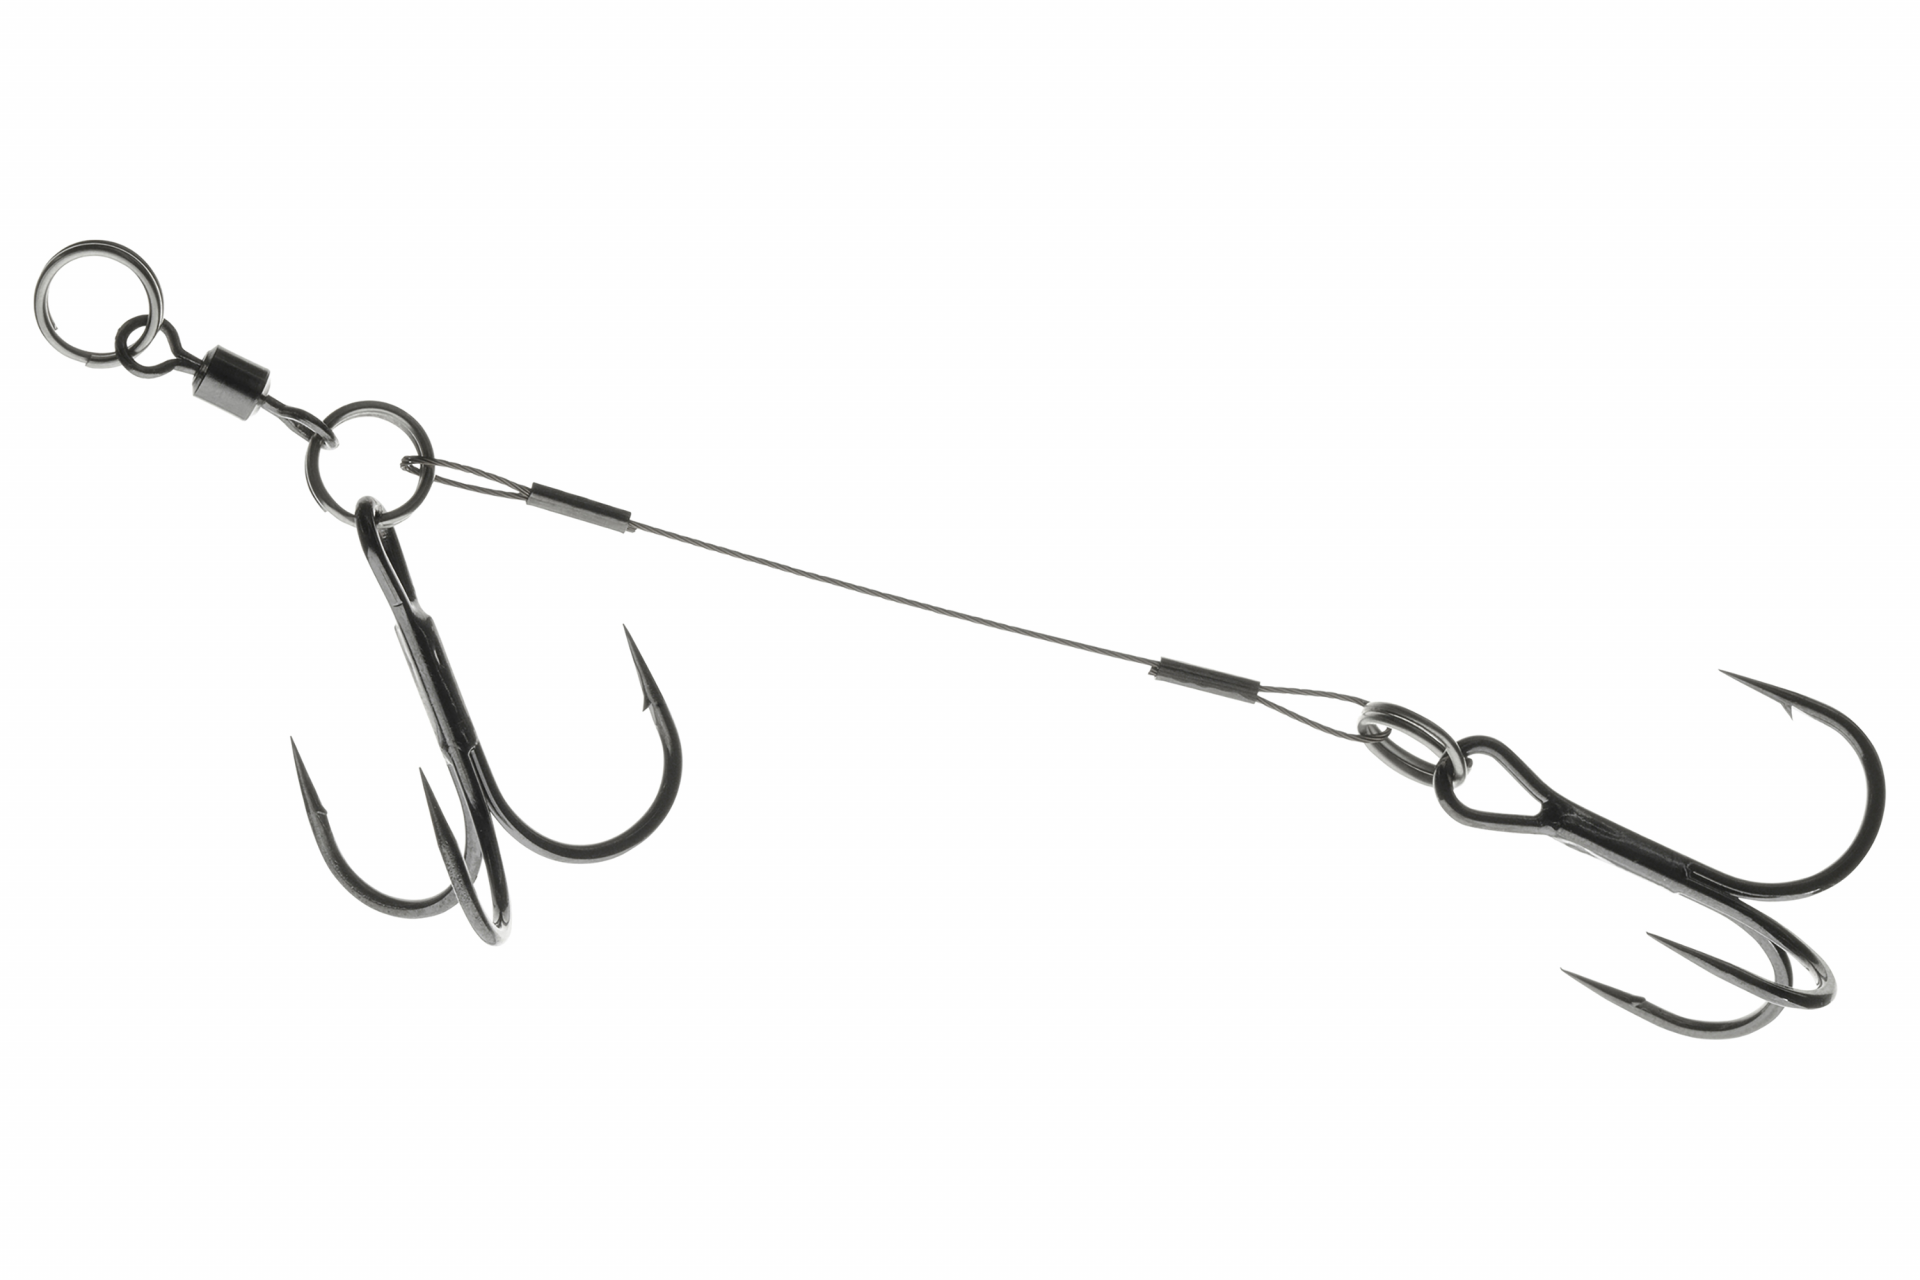 Prorex Screw-In Assist Hook <span>| Stingerhaken-System</span>